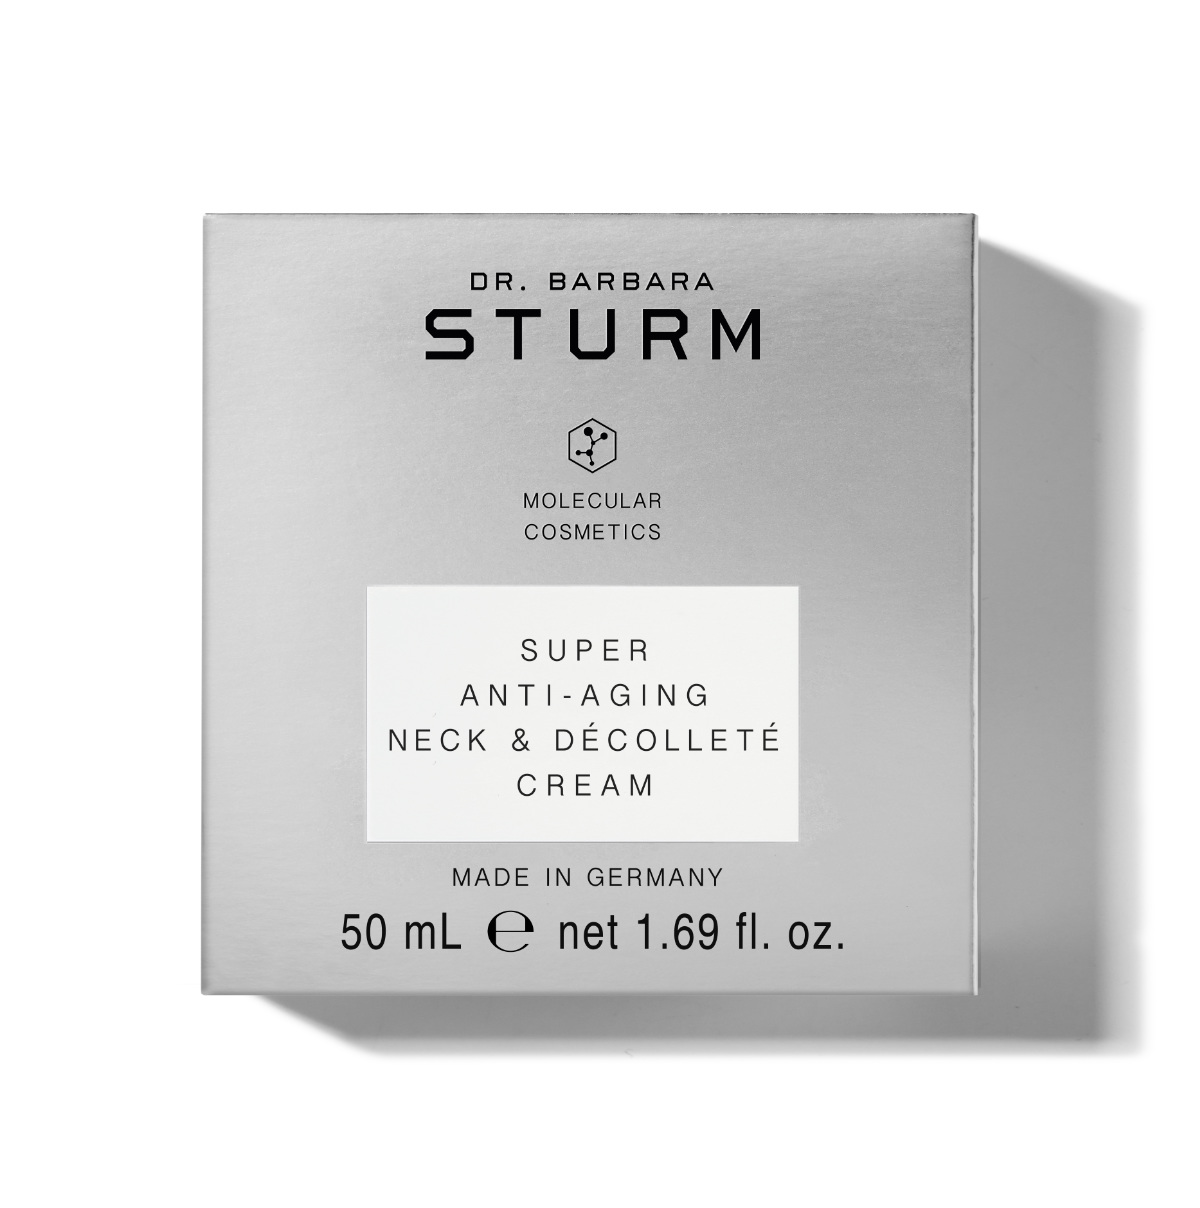 Dr. Barbara Sturm’s Introduces New Super Anti-aging Neck & Décolleté Cream